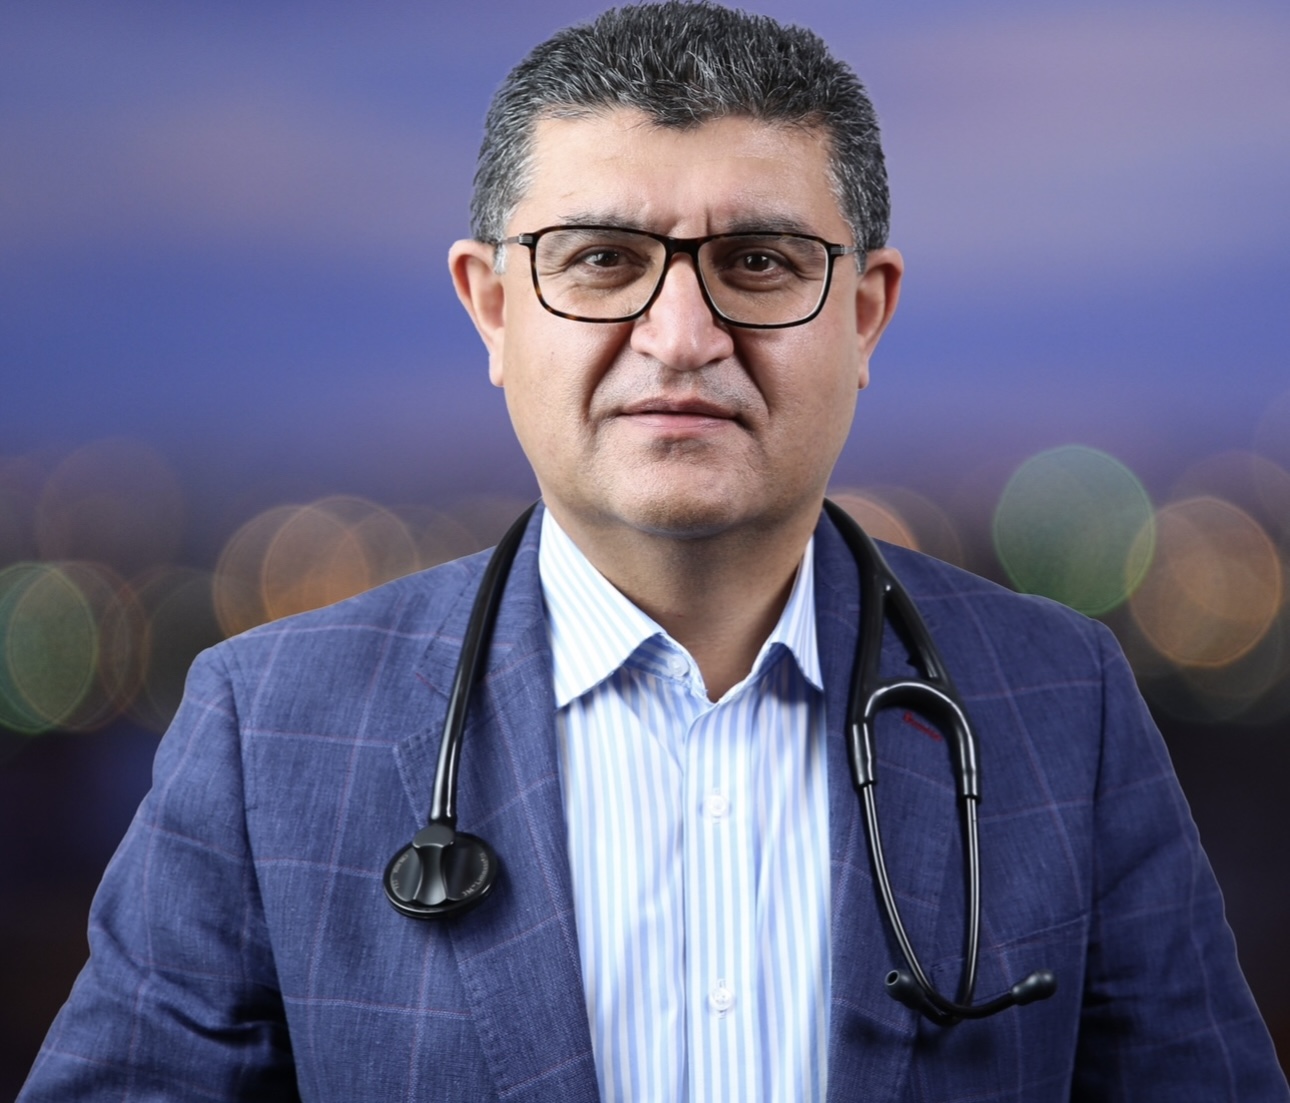 Dr Ahmed Khan